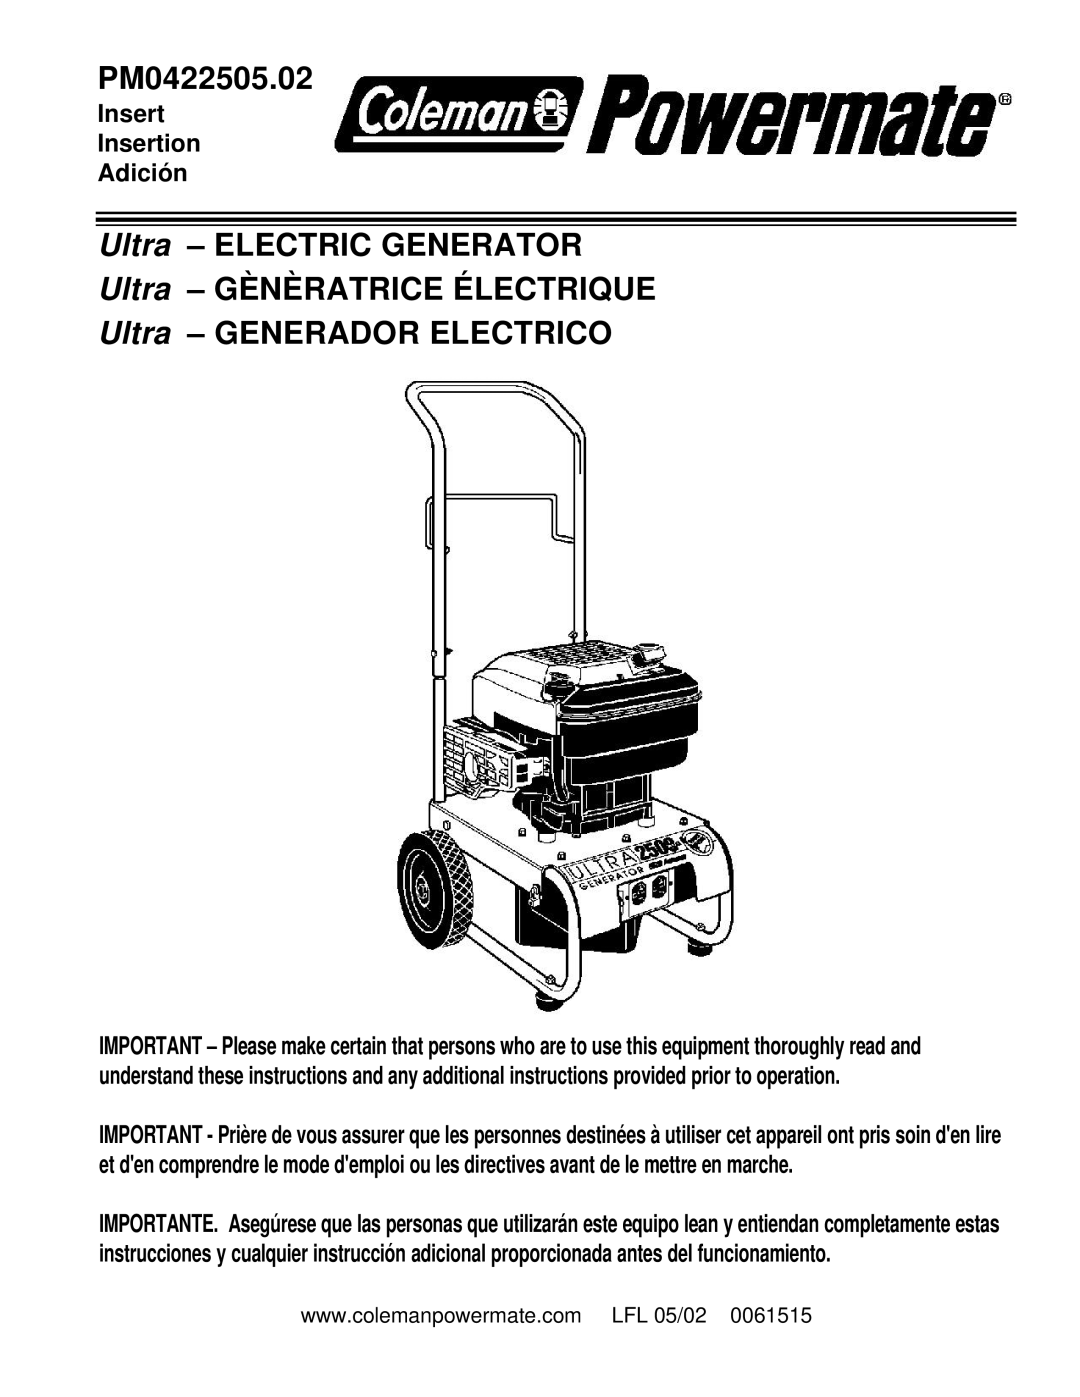 Briggs & Stratton PM0422505.02 manual Ultra – ELECTRIC GENERATOR, Ultra – GÈNÈRATRICE ÉLECTRIQUE, Insert Insertion Adición 